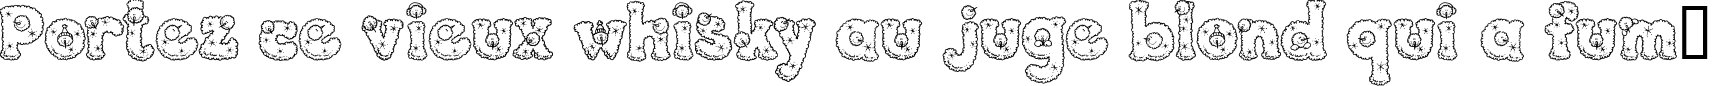 Пример написания шрифтом PC Snowballs текста на французском